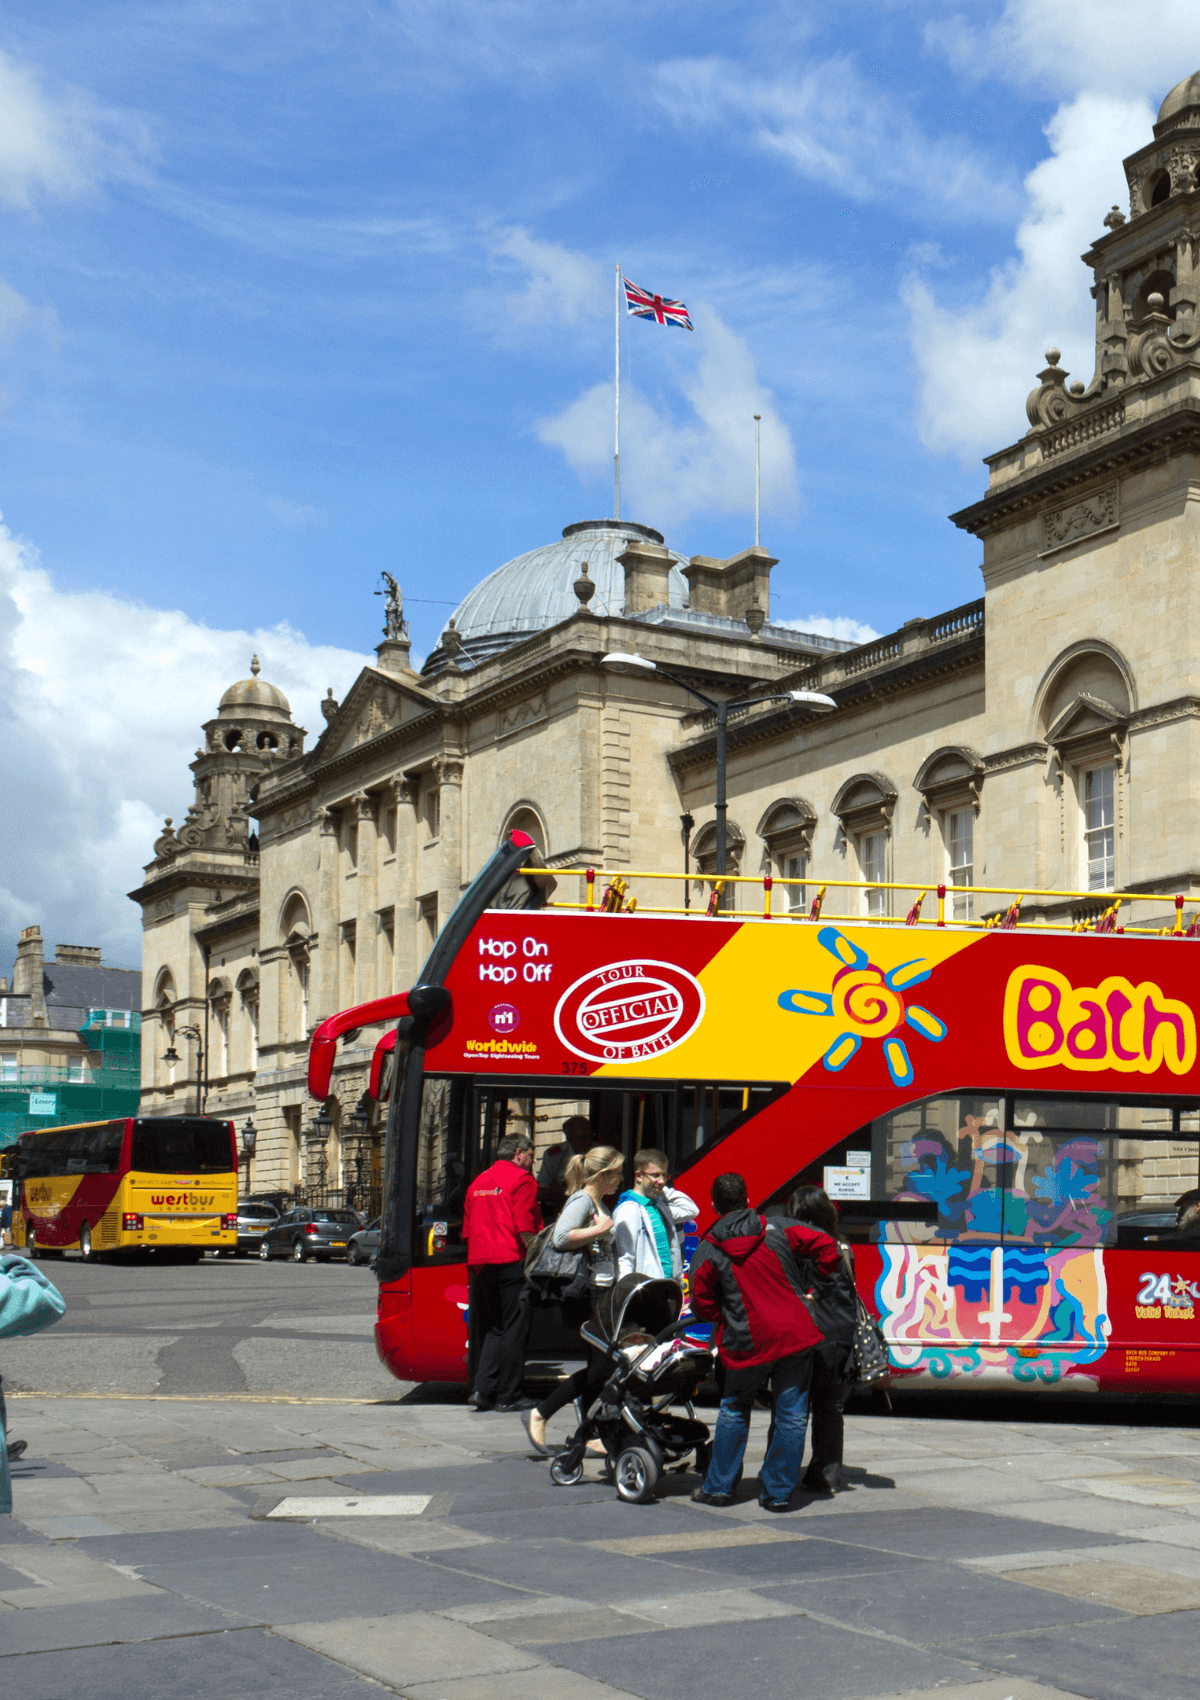 Buses in Bath, England